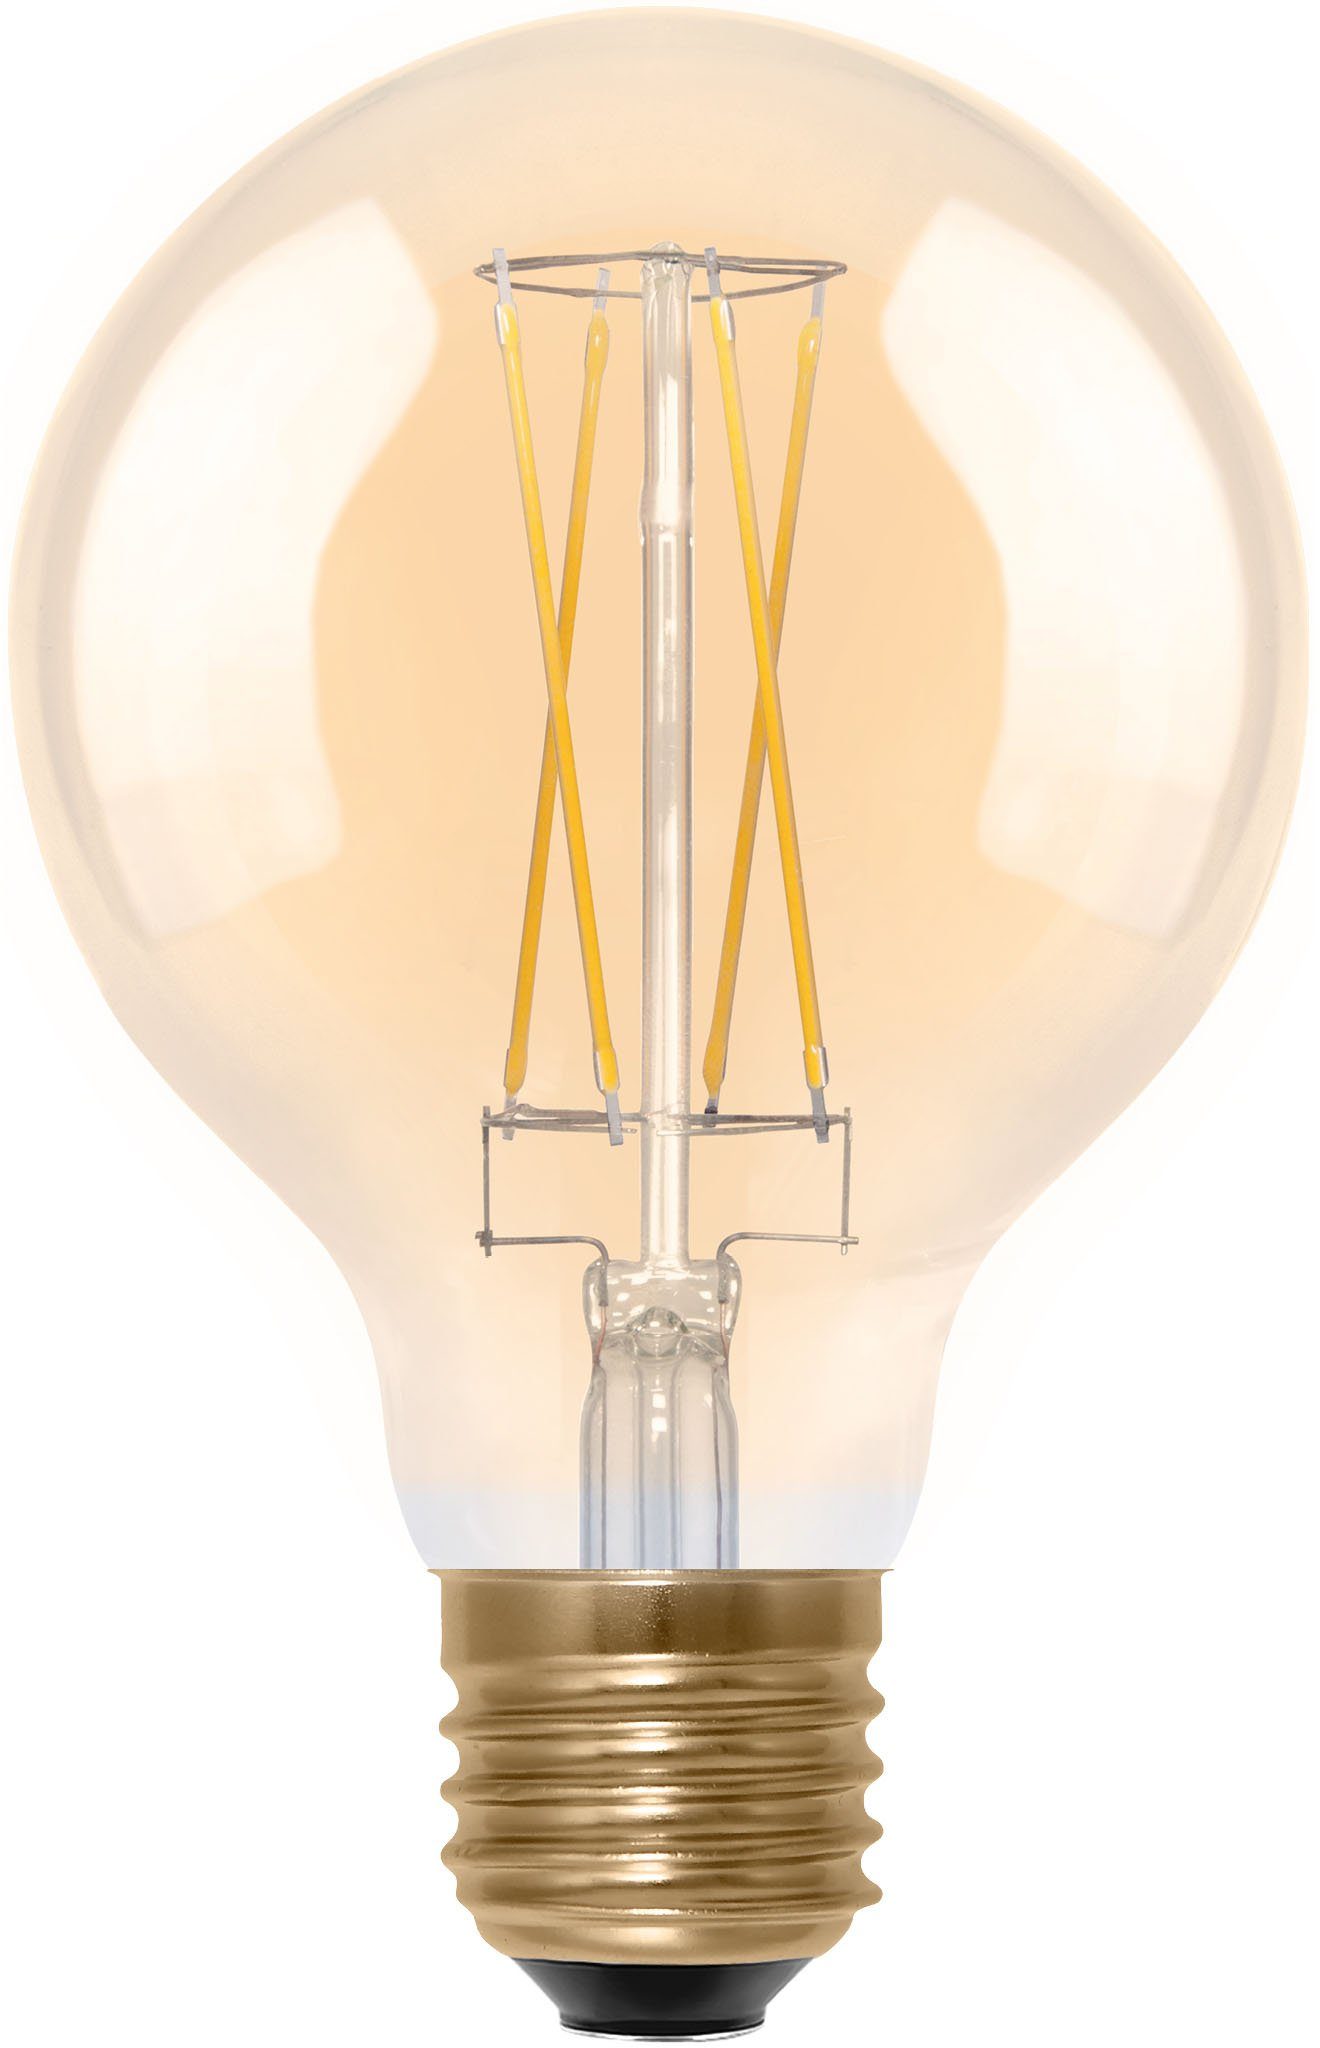 SEGULA LED-Leuchtmittel LED Globe 80 gold, E27, Warmweiß, dimmbar, E27, Globe 80, gold